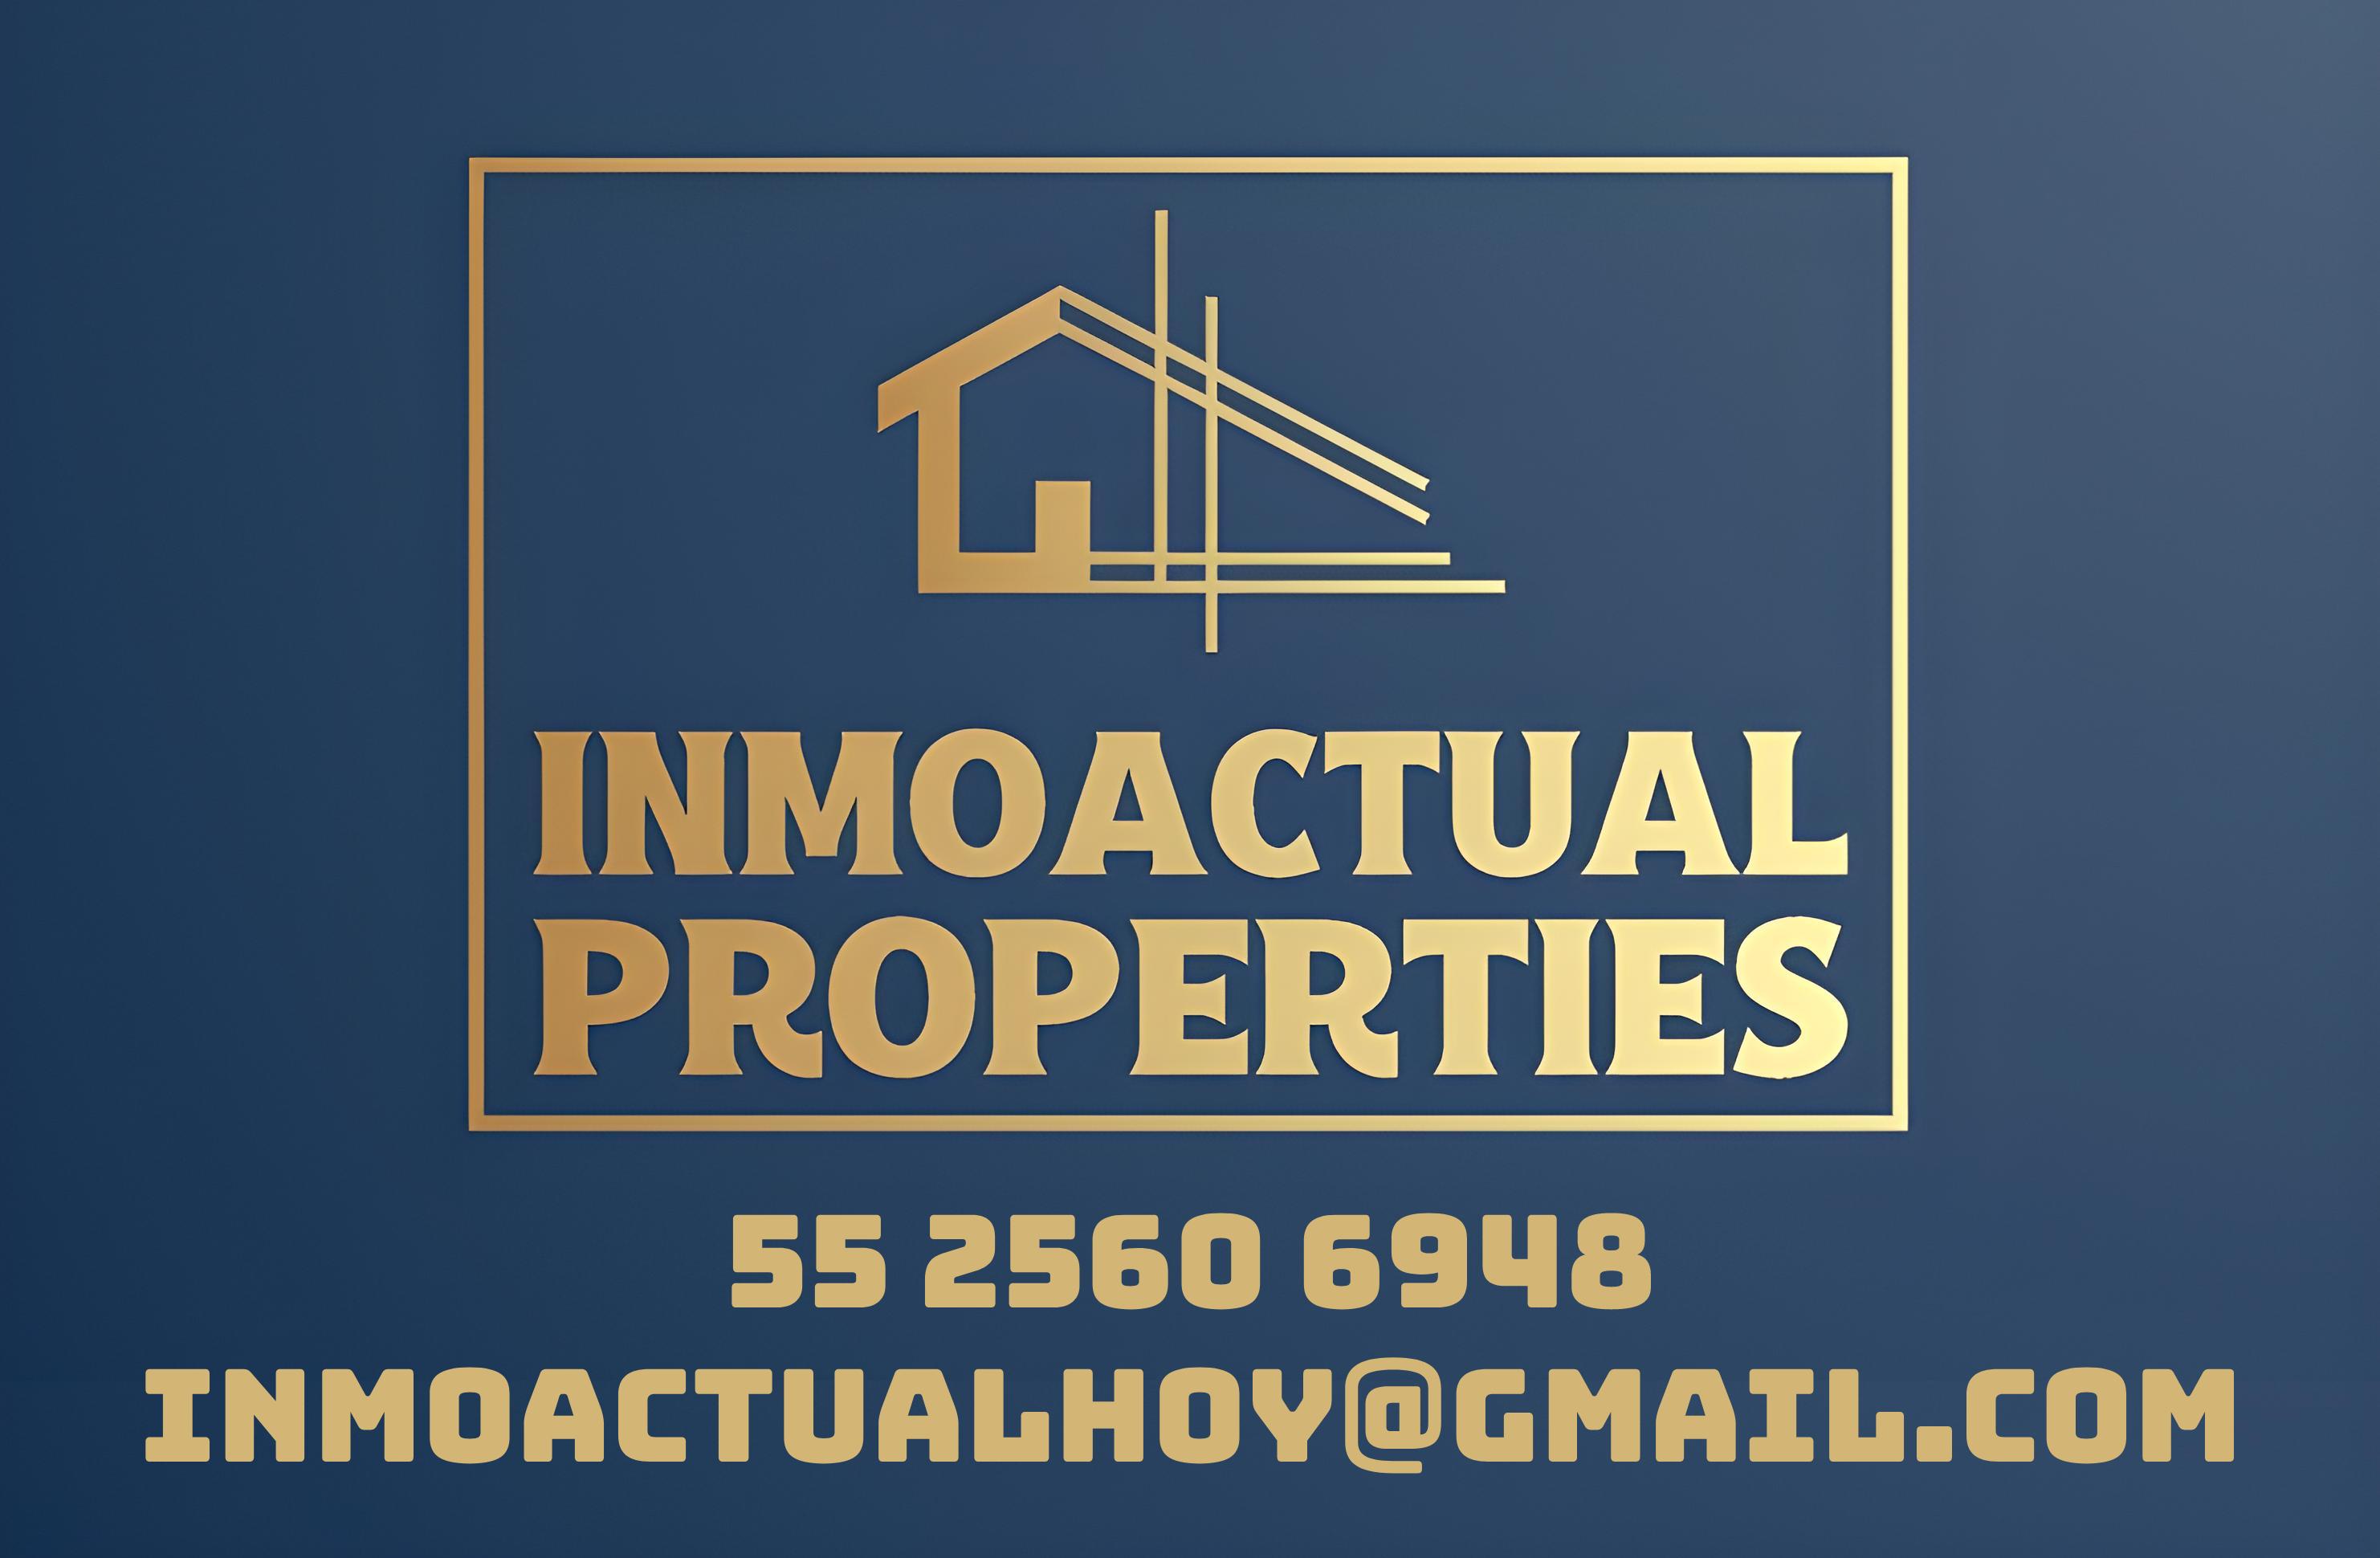 Inmoactual Properties